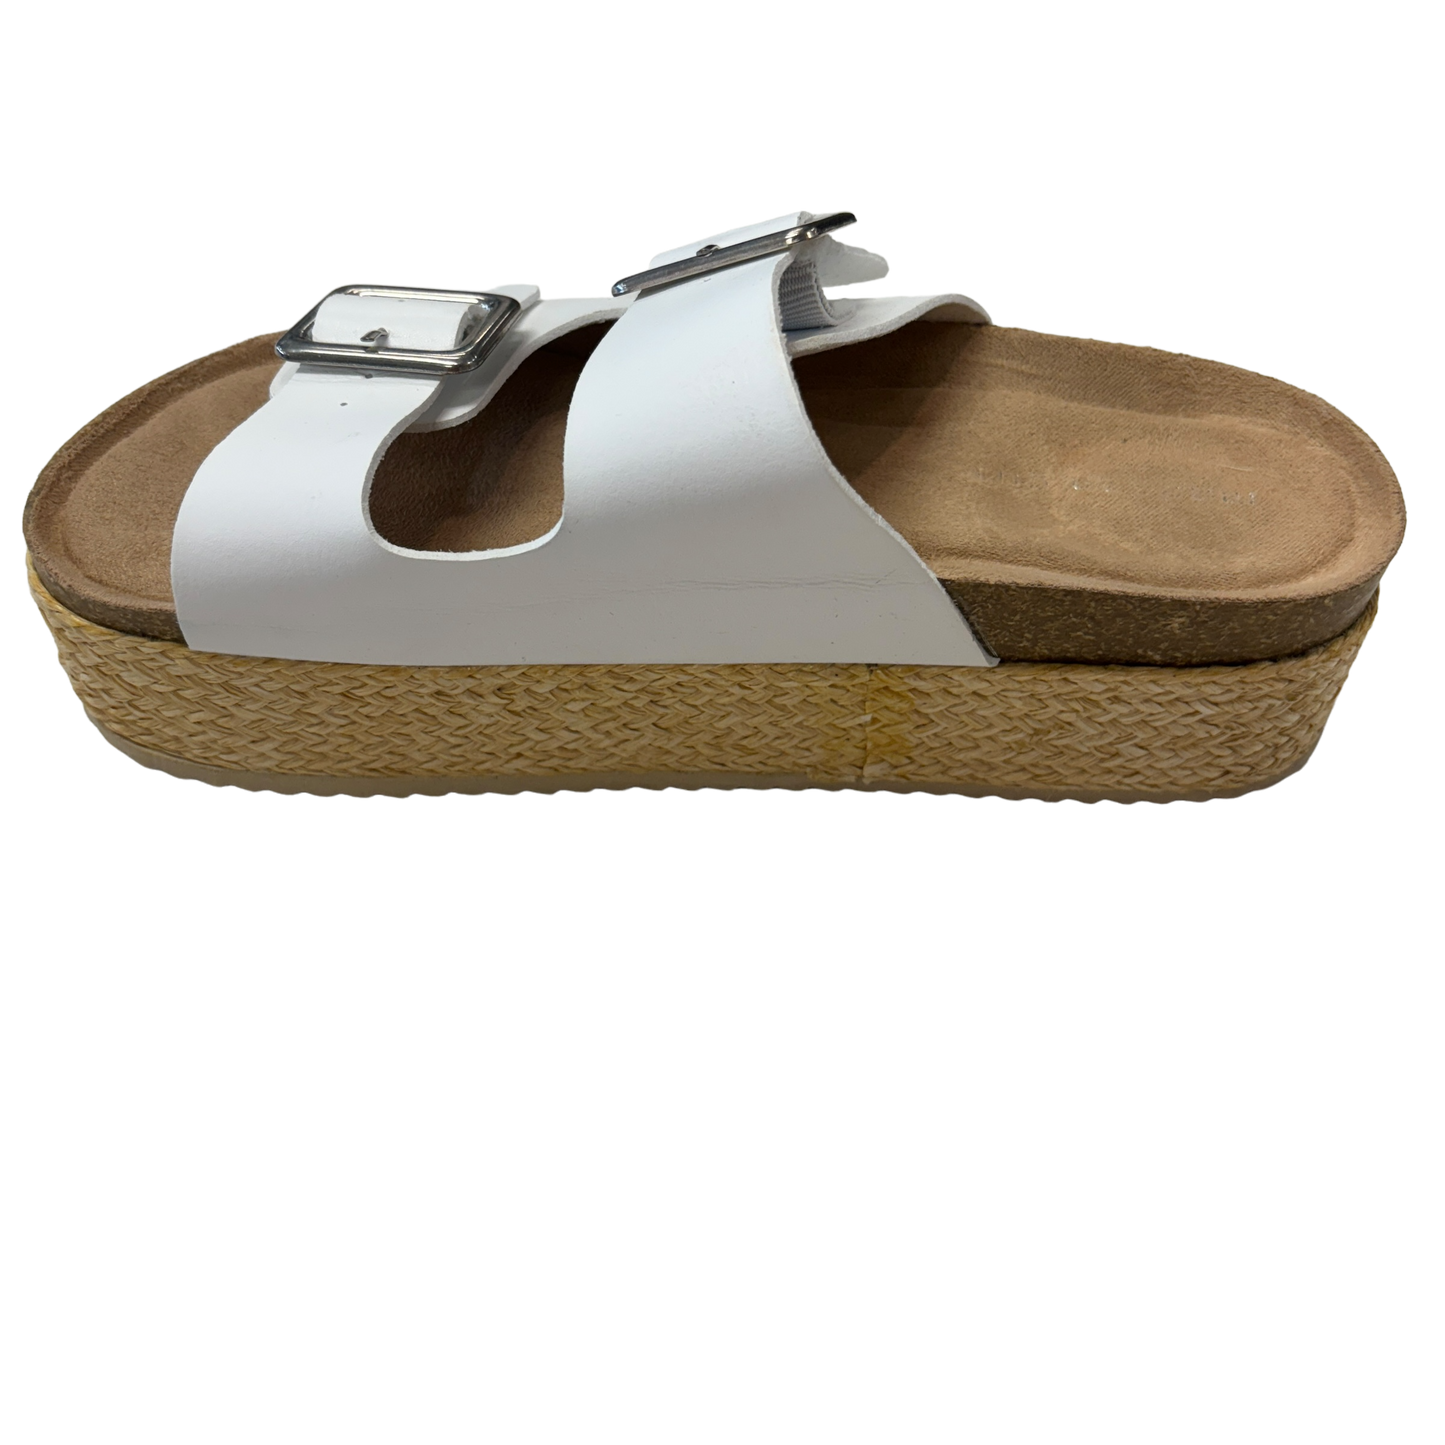 Sandals Heels Platform By Madden Girl  Size: 10